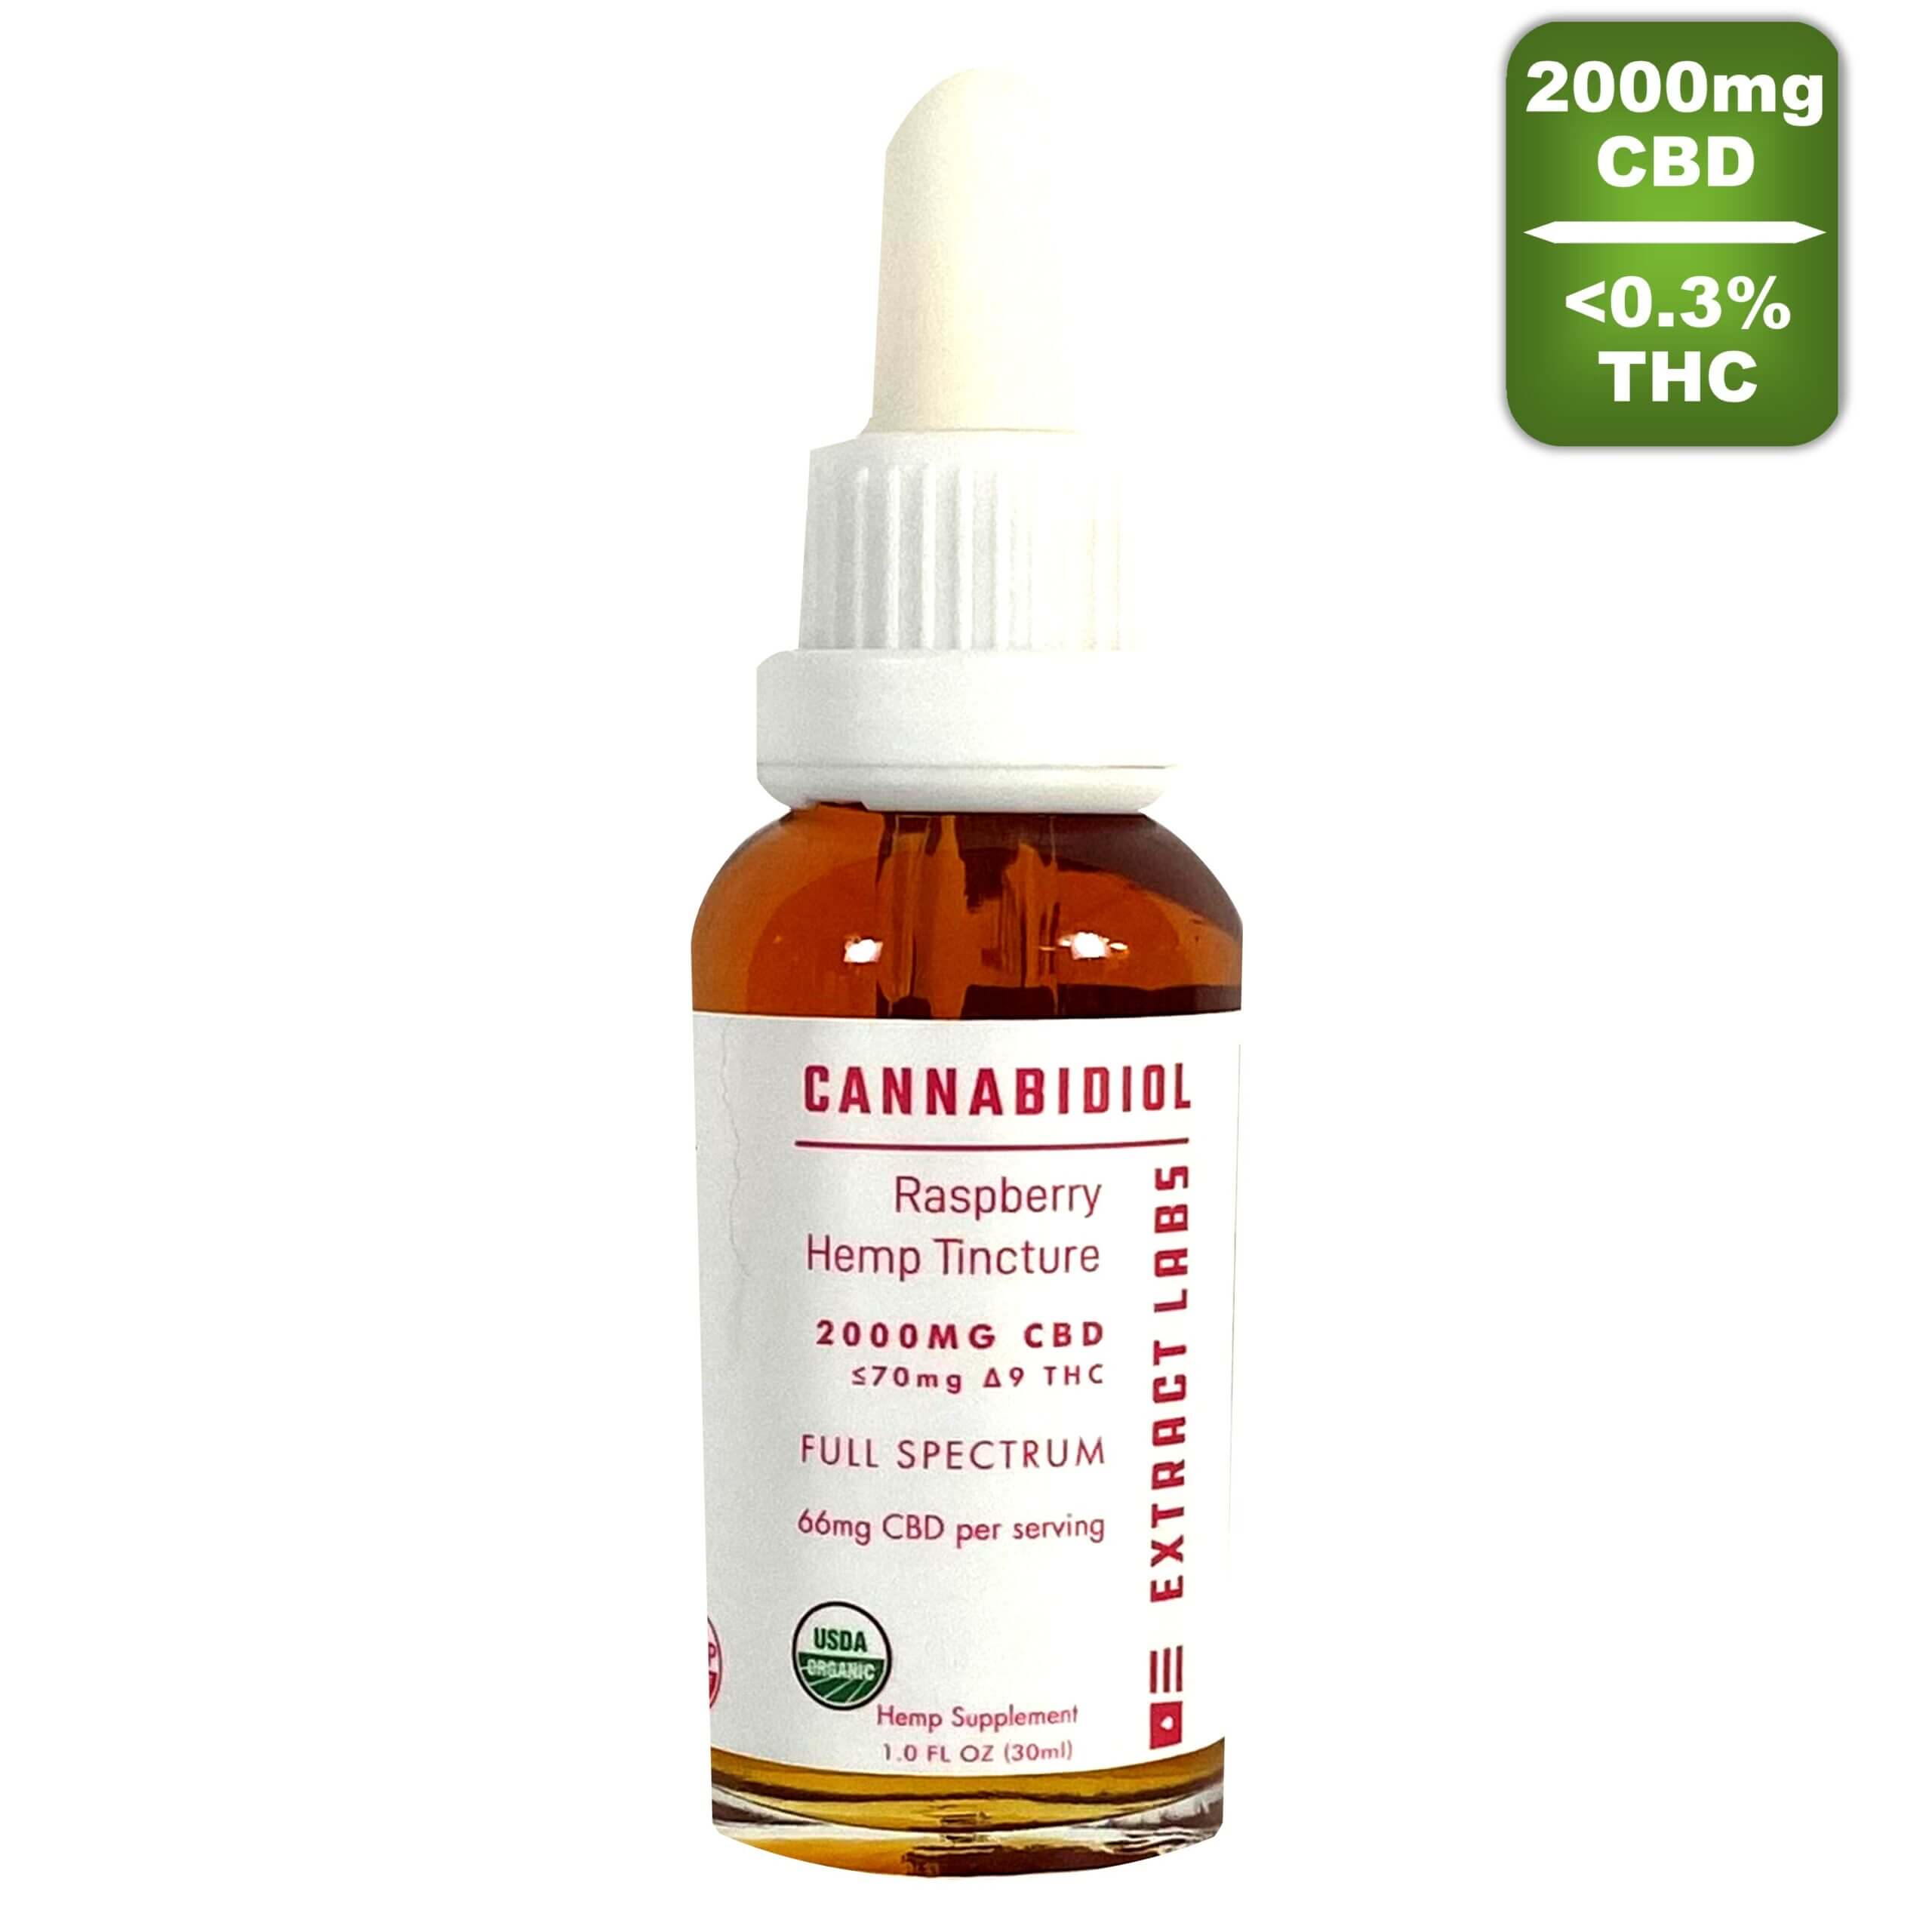 Extract labs - Strawberry flavor tincture 2000mg CBD + THc